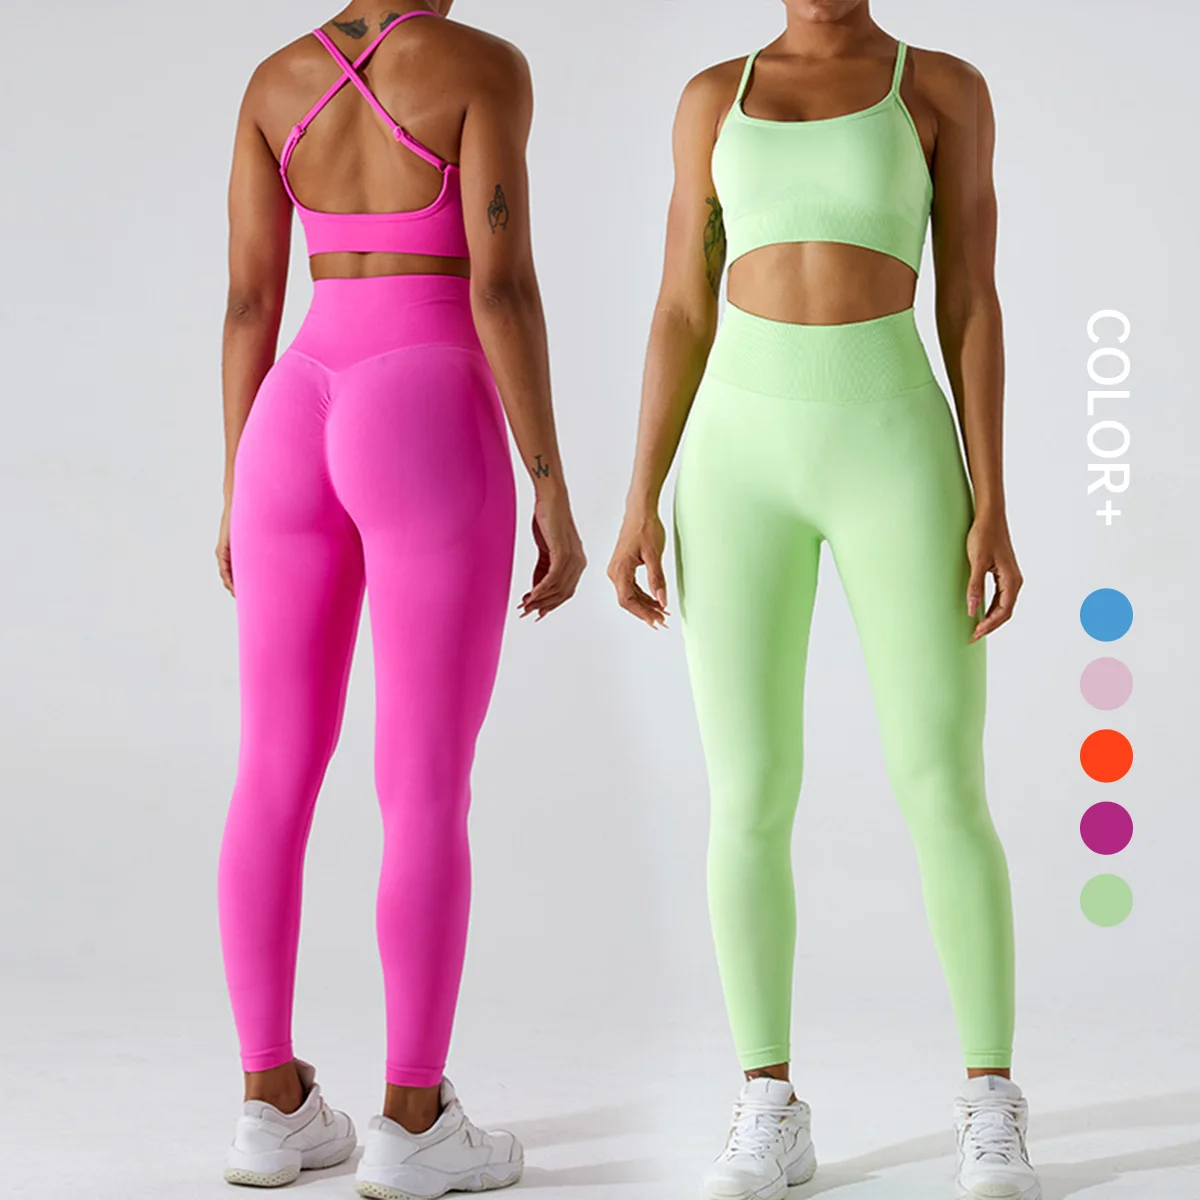 

SHINBENE OEM ODM Seamless 2.0 Cloud Yoga Sets Fitness Women Clothing Gym Activewear Leggings Set for Women